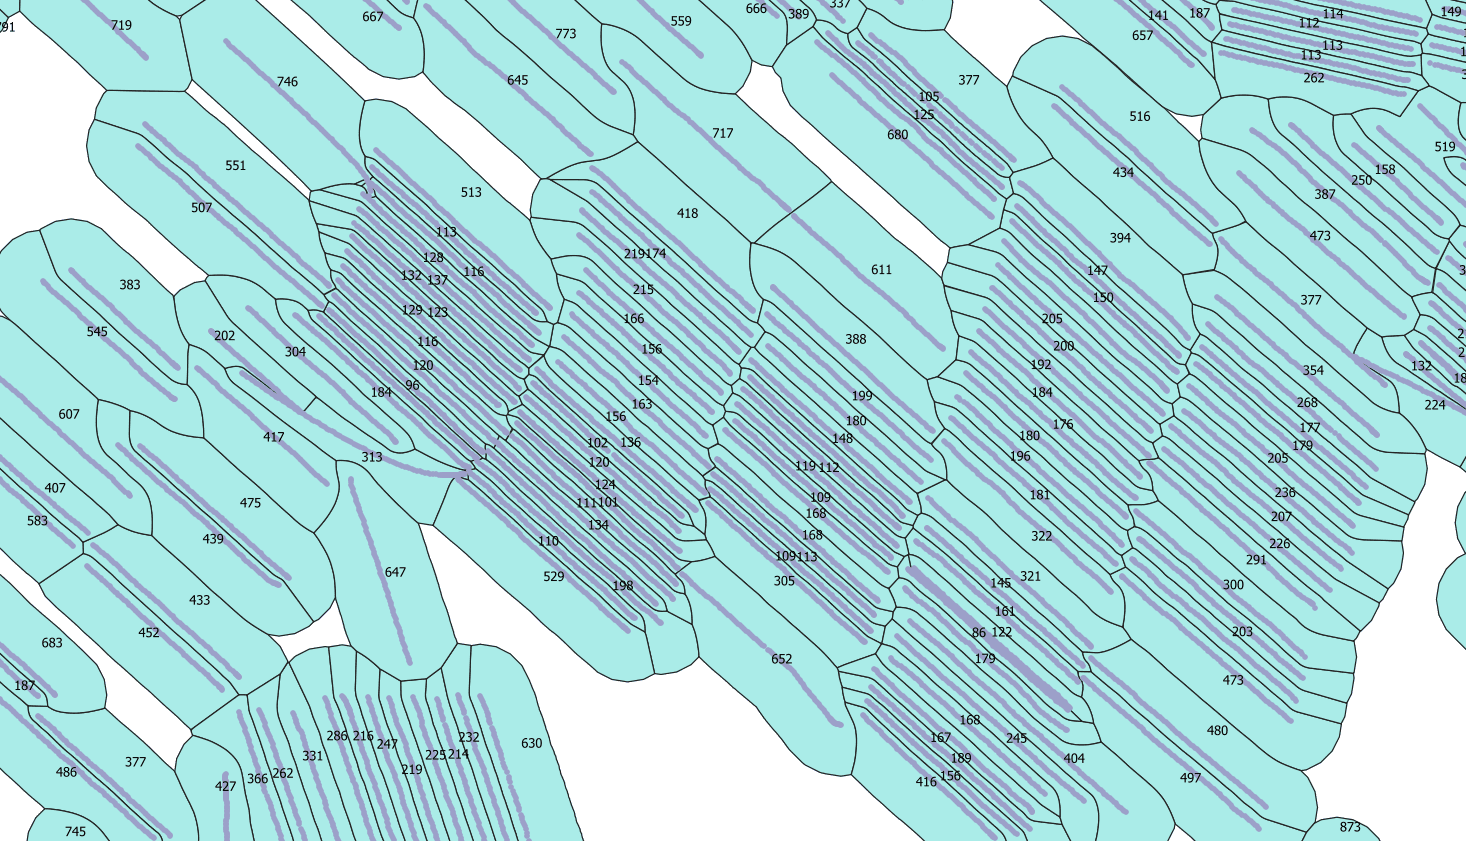 Figure 1: Sample of Study Area Showing Pseudo-Drainage Areas and Acreage Values 